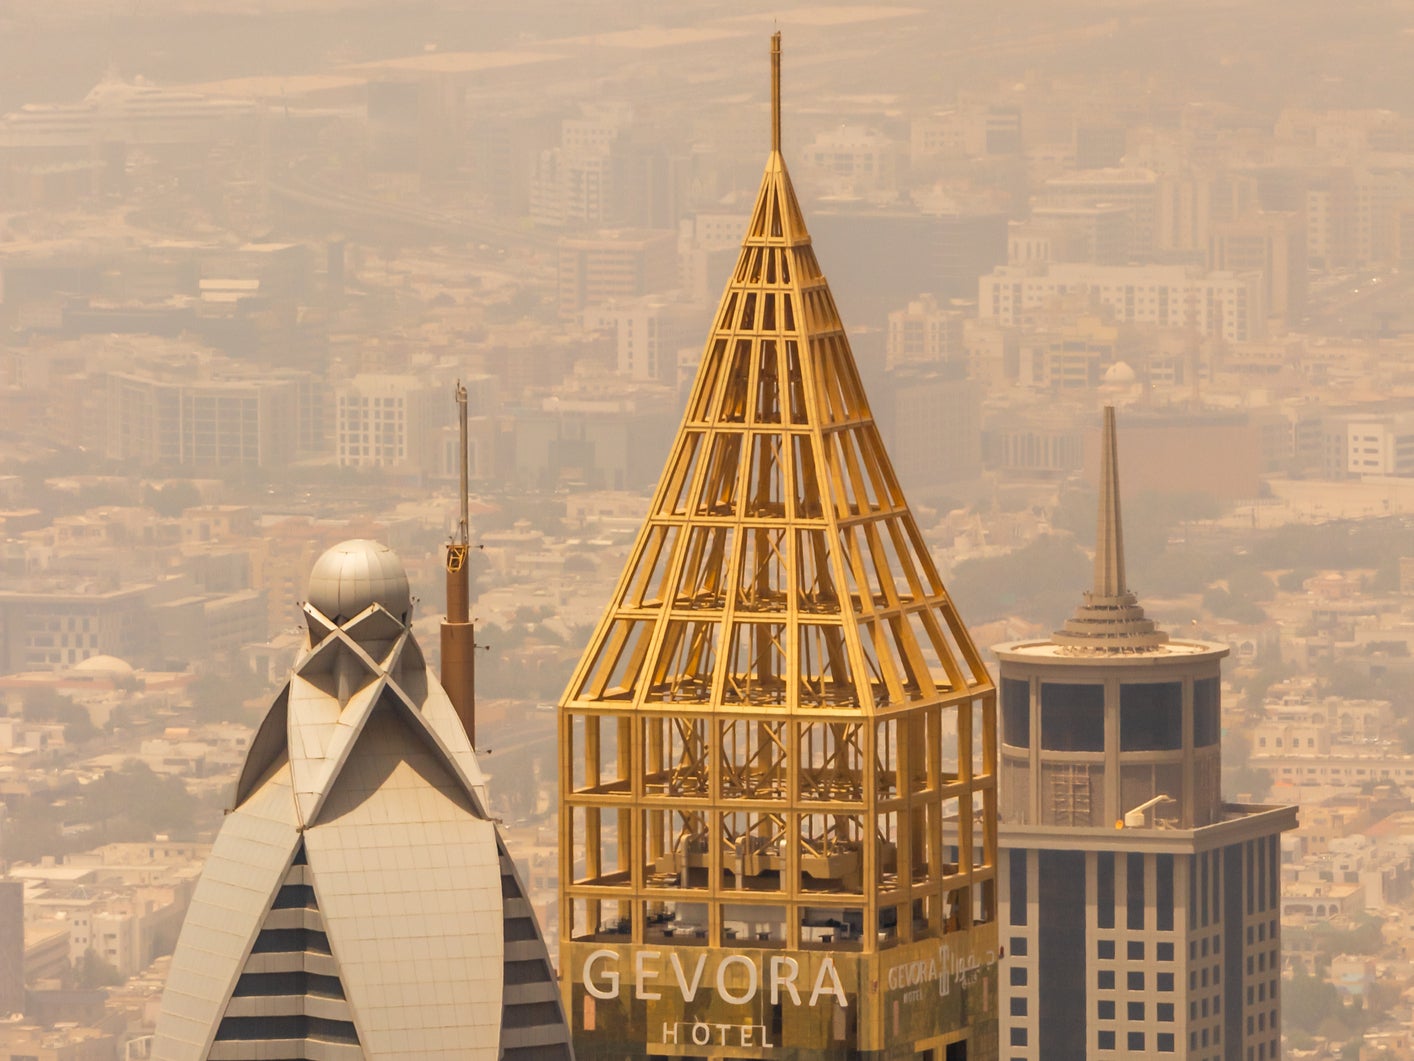 Dubai’s Gevora Hotel peaks at 1,168 feet